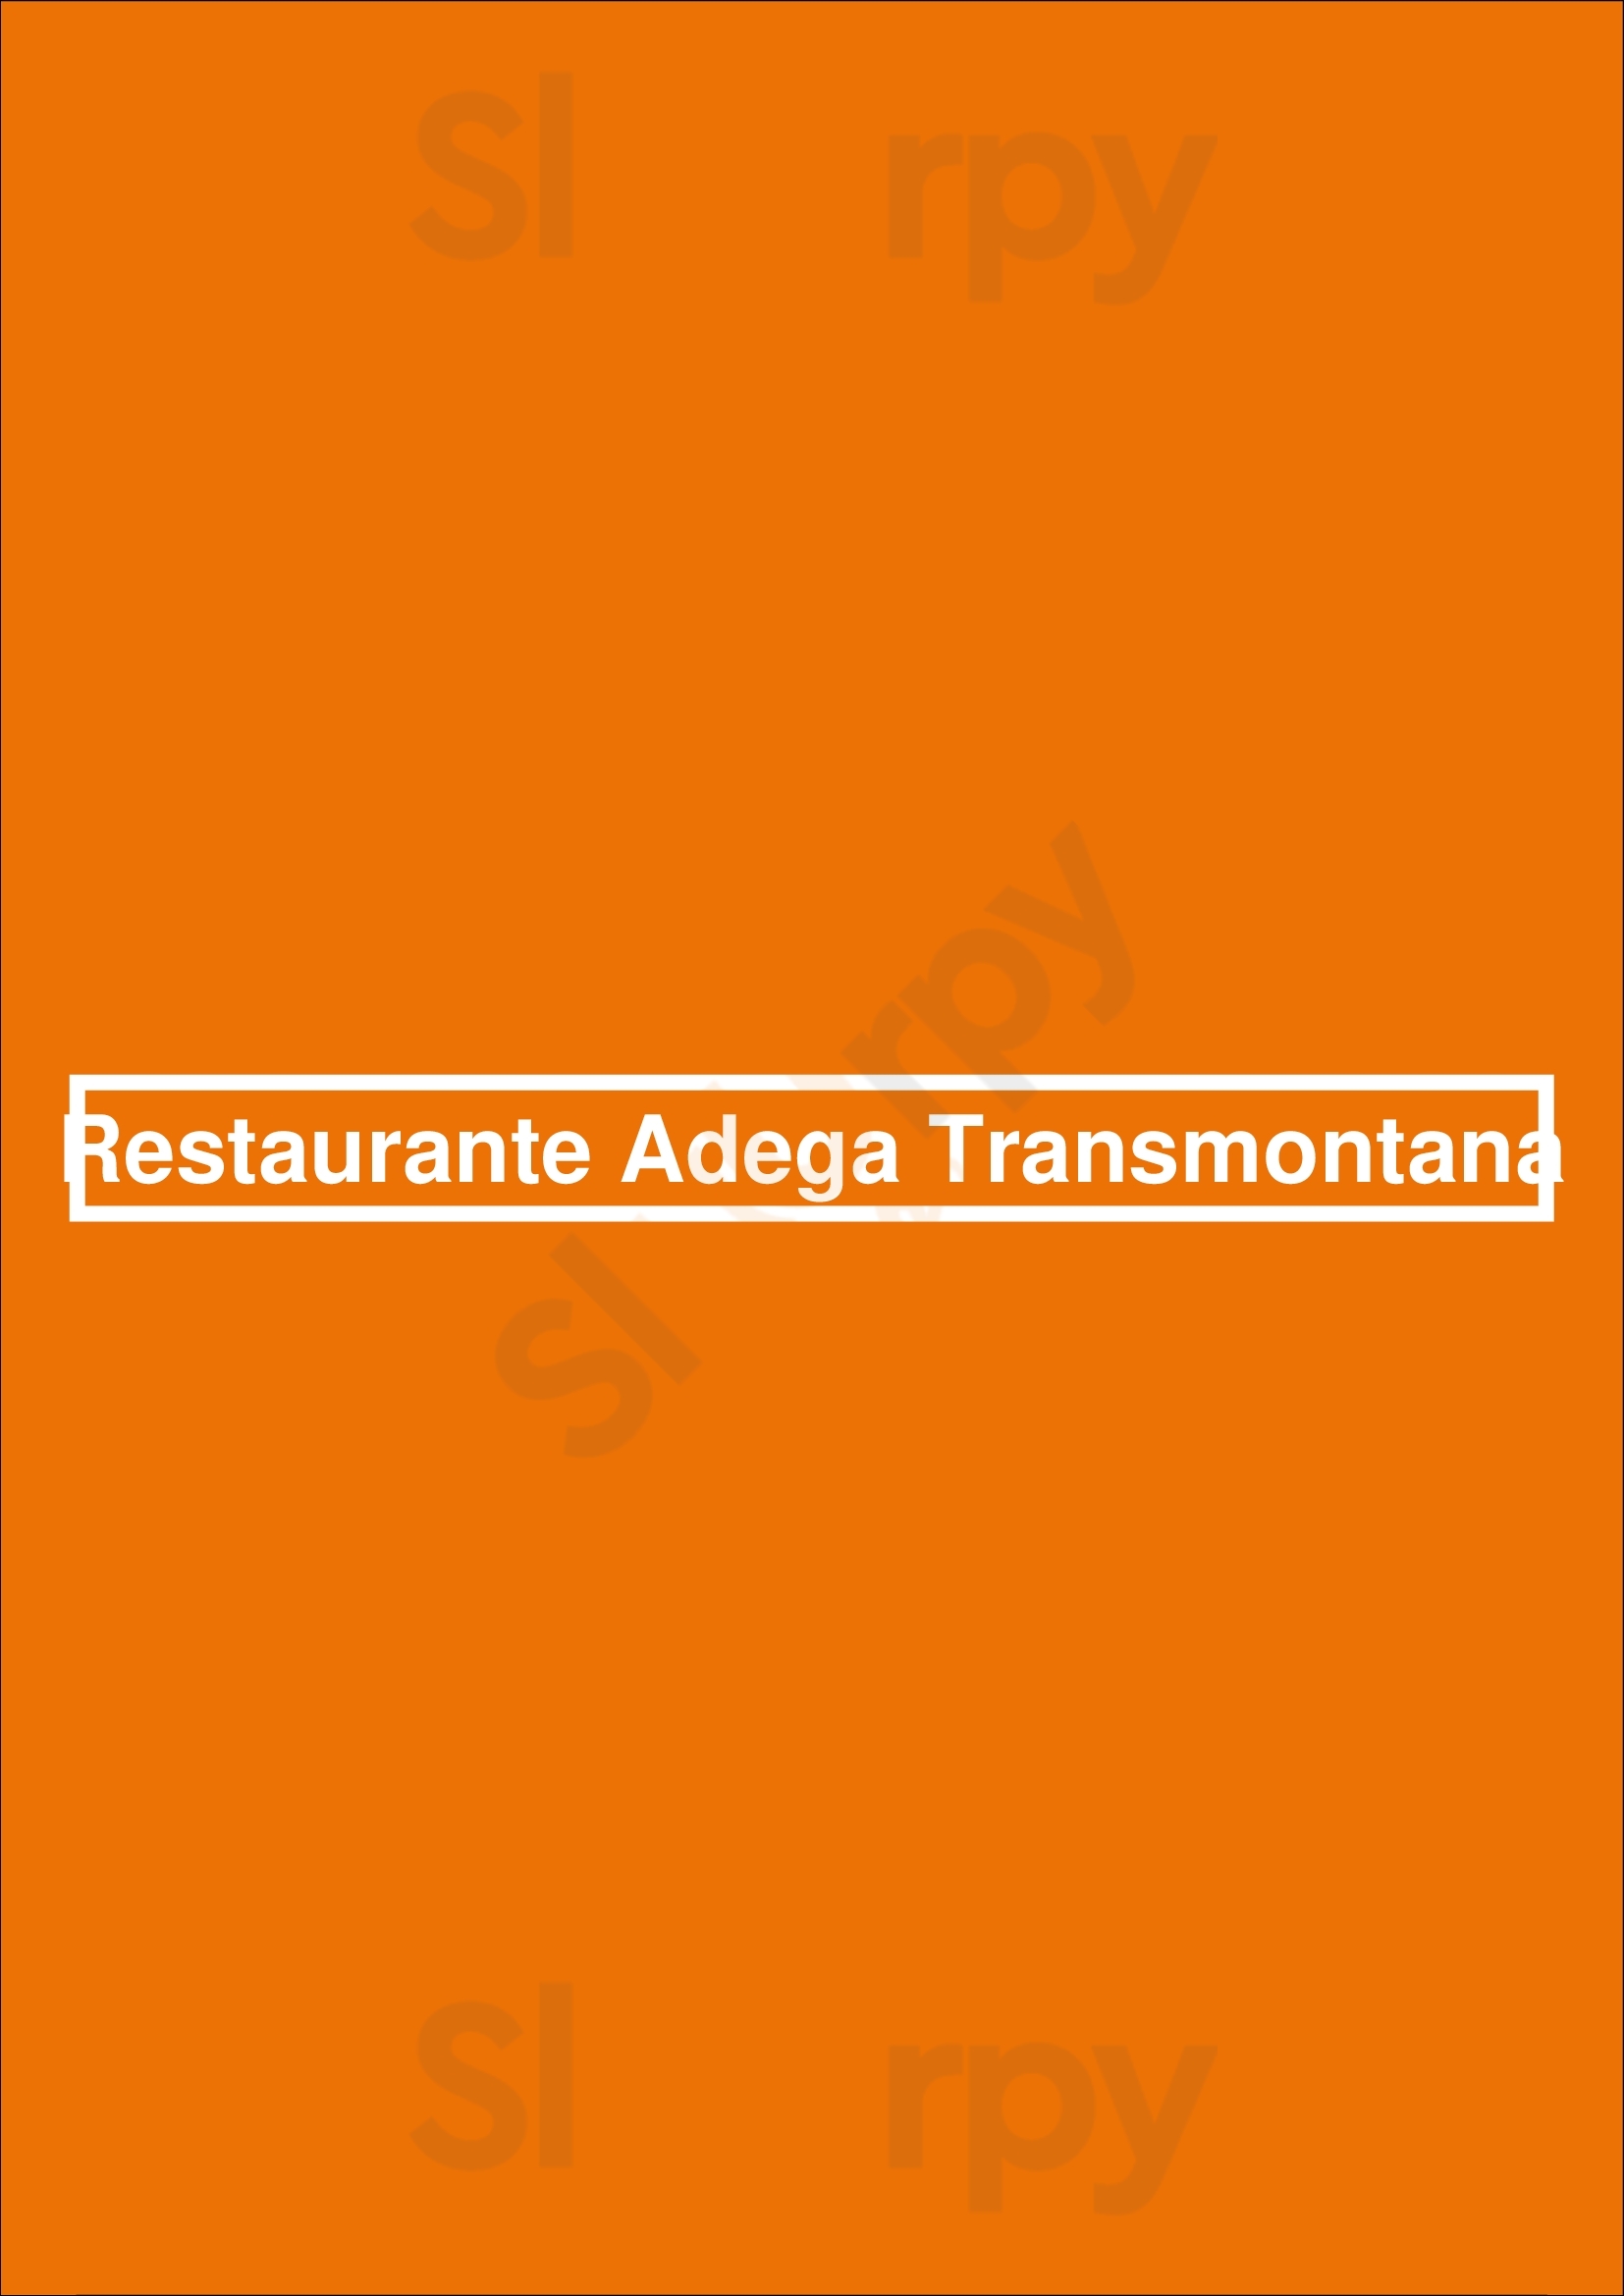 Restaurante Adega Transmontana Braga Menu - 1